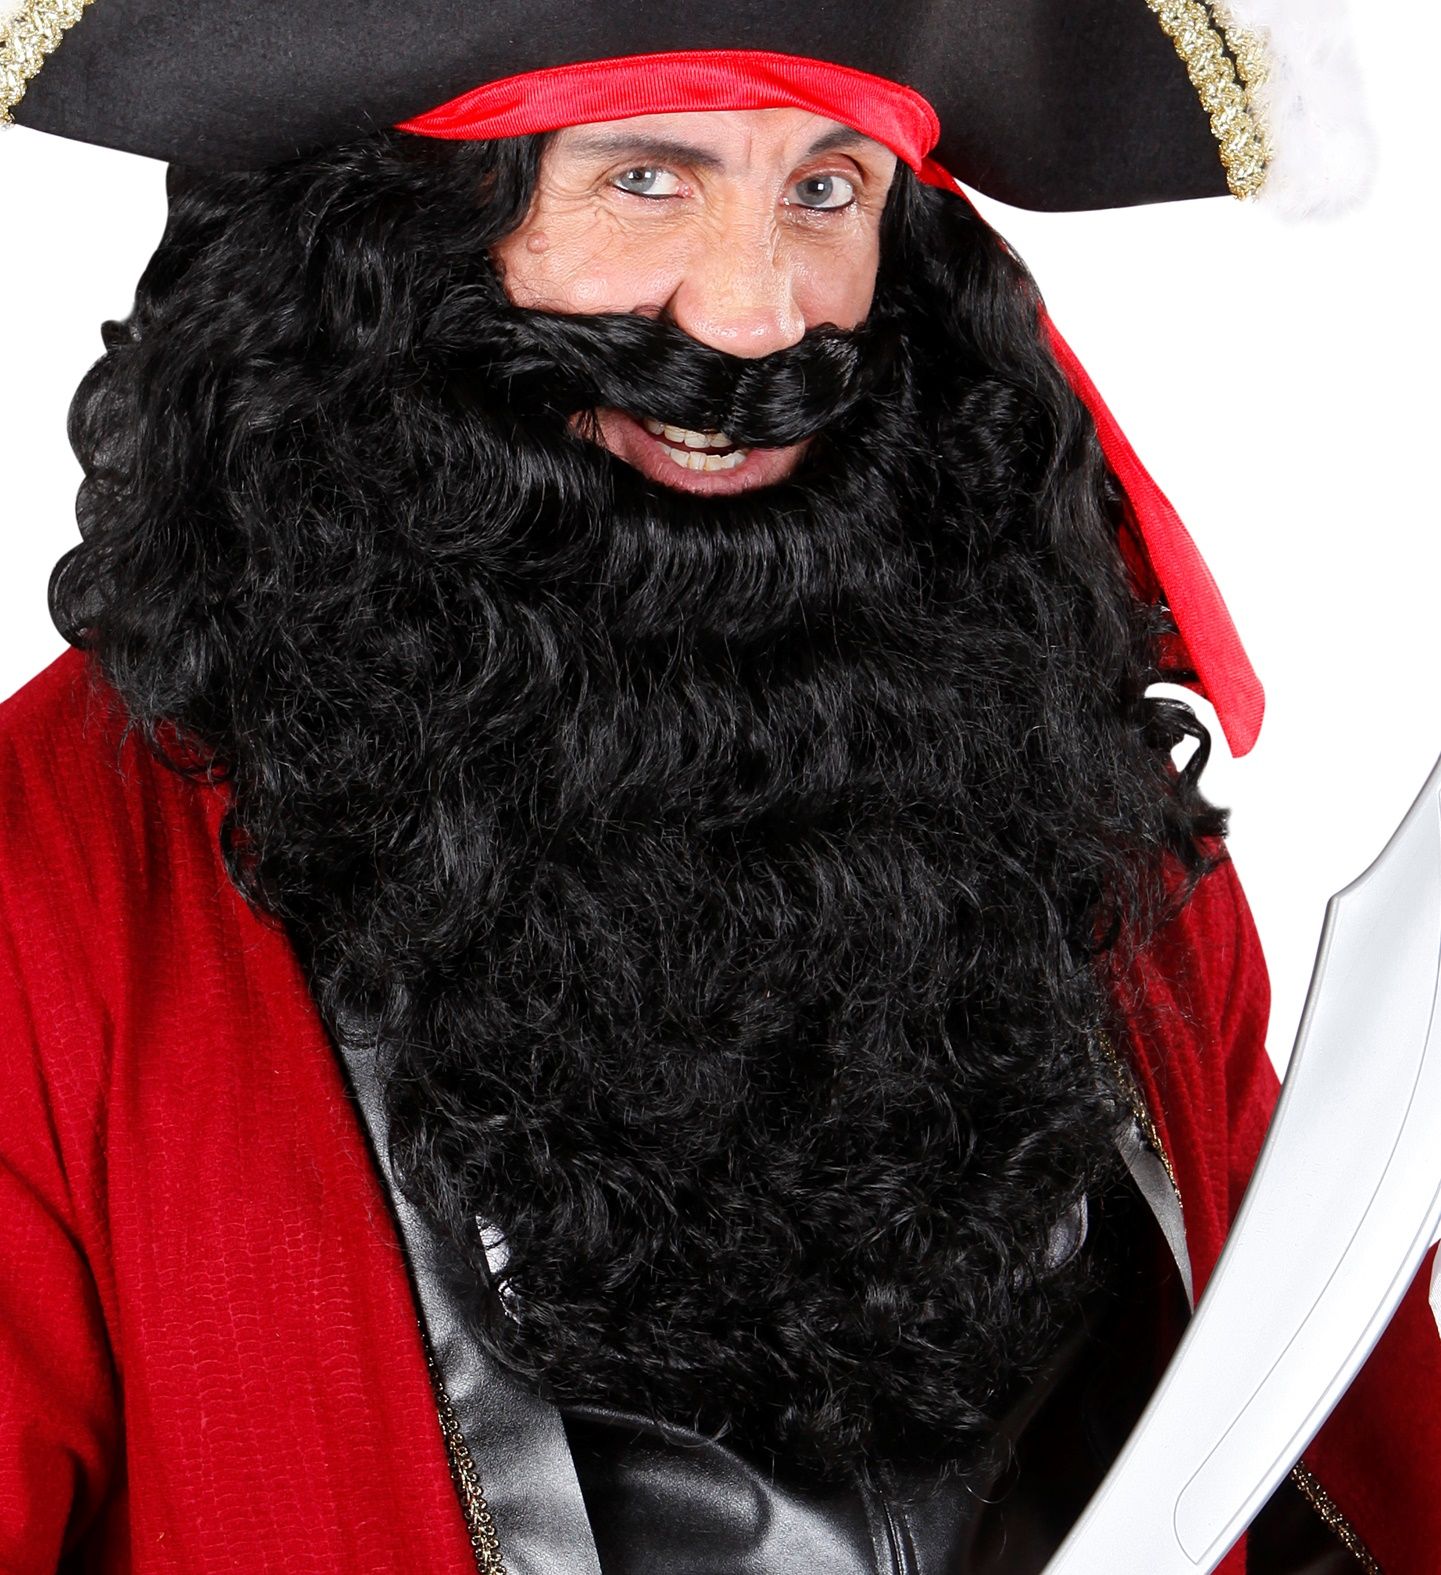 Zwarte piraten baard